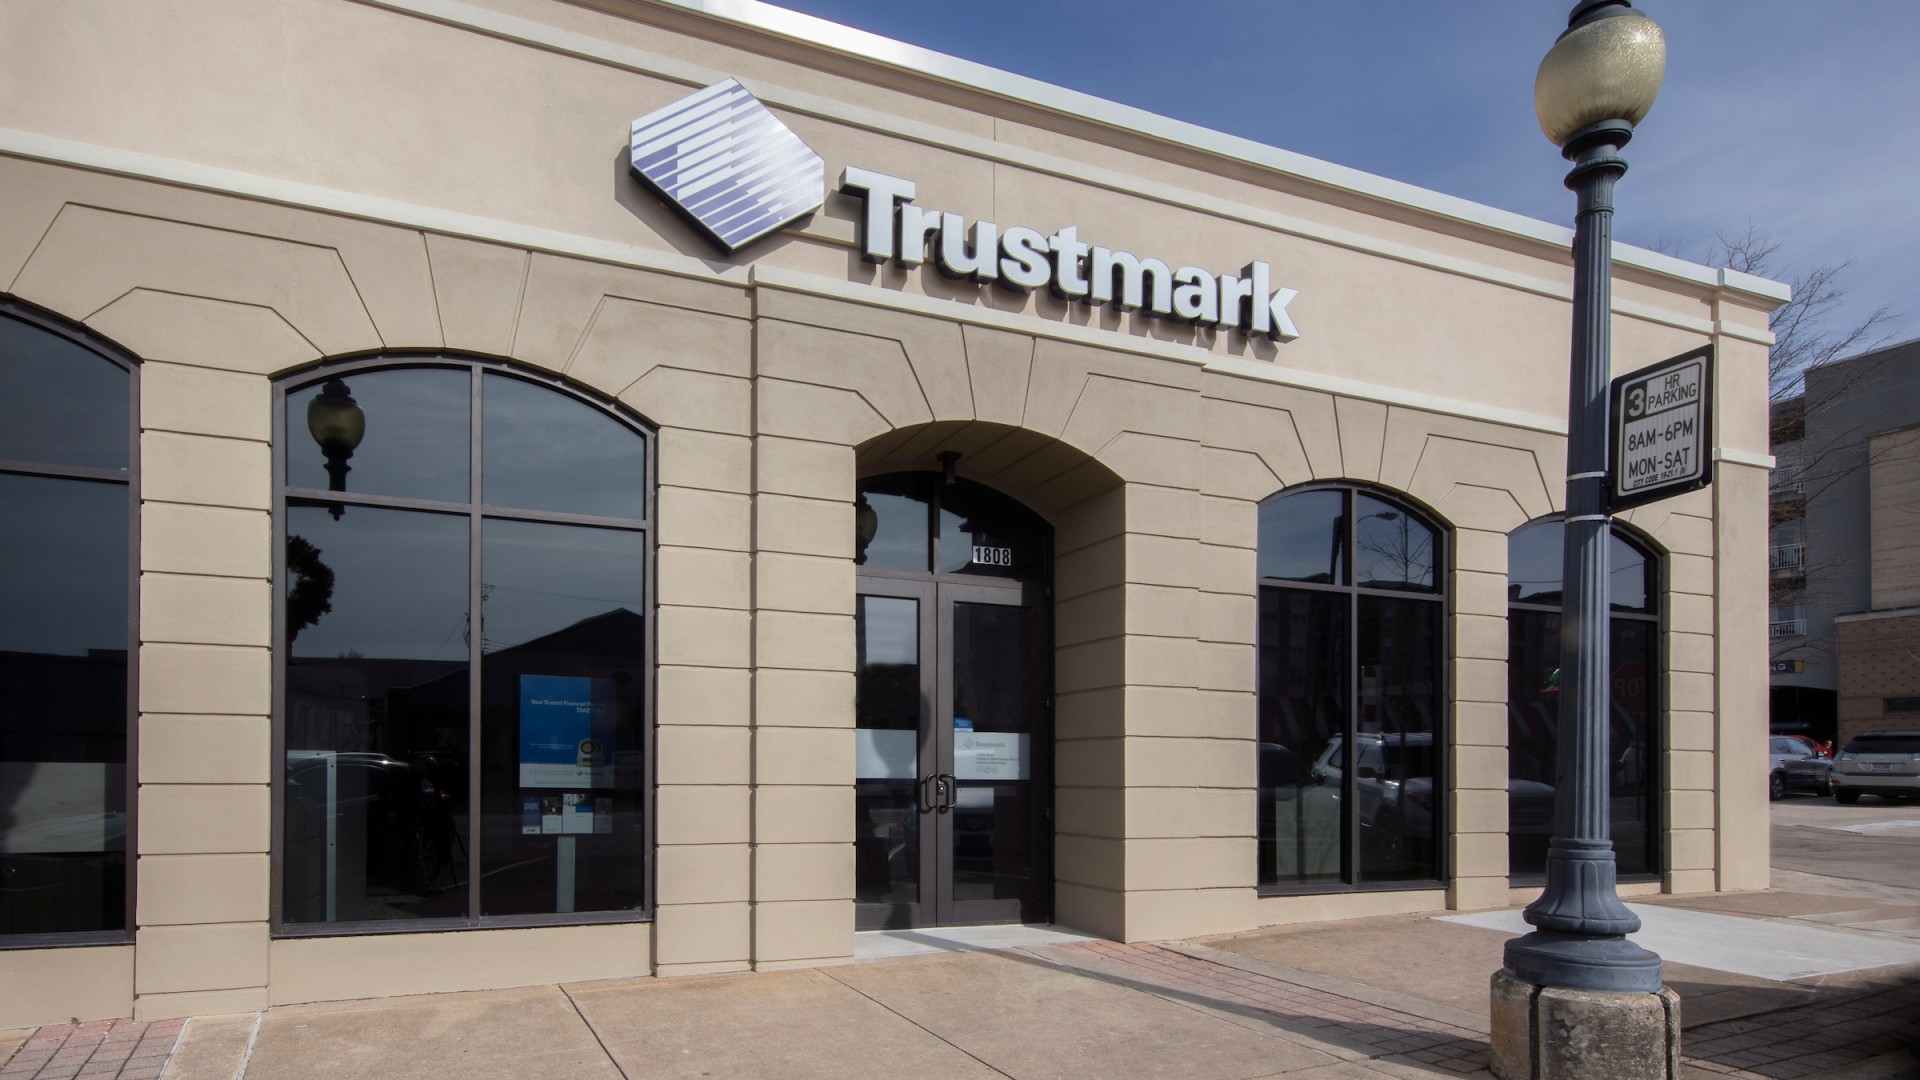 Trustmark Bank